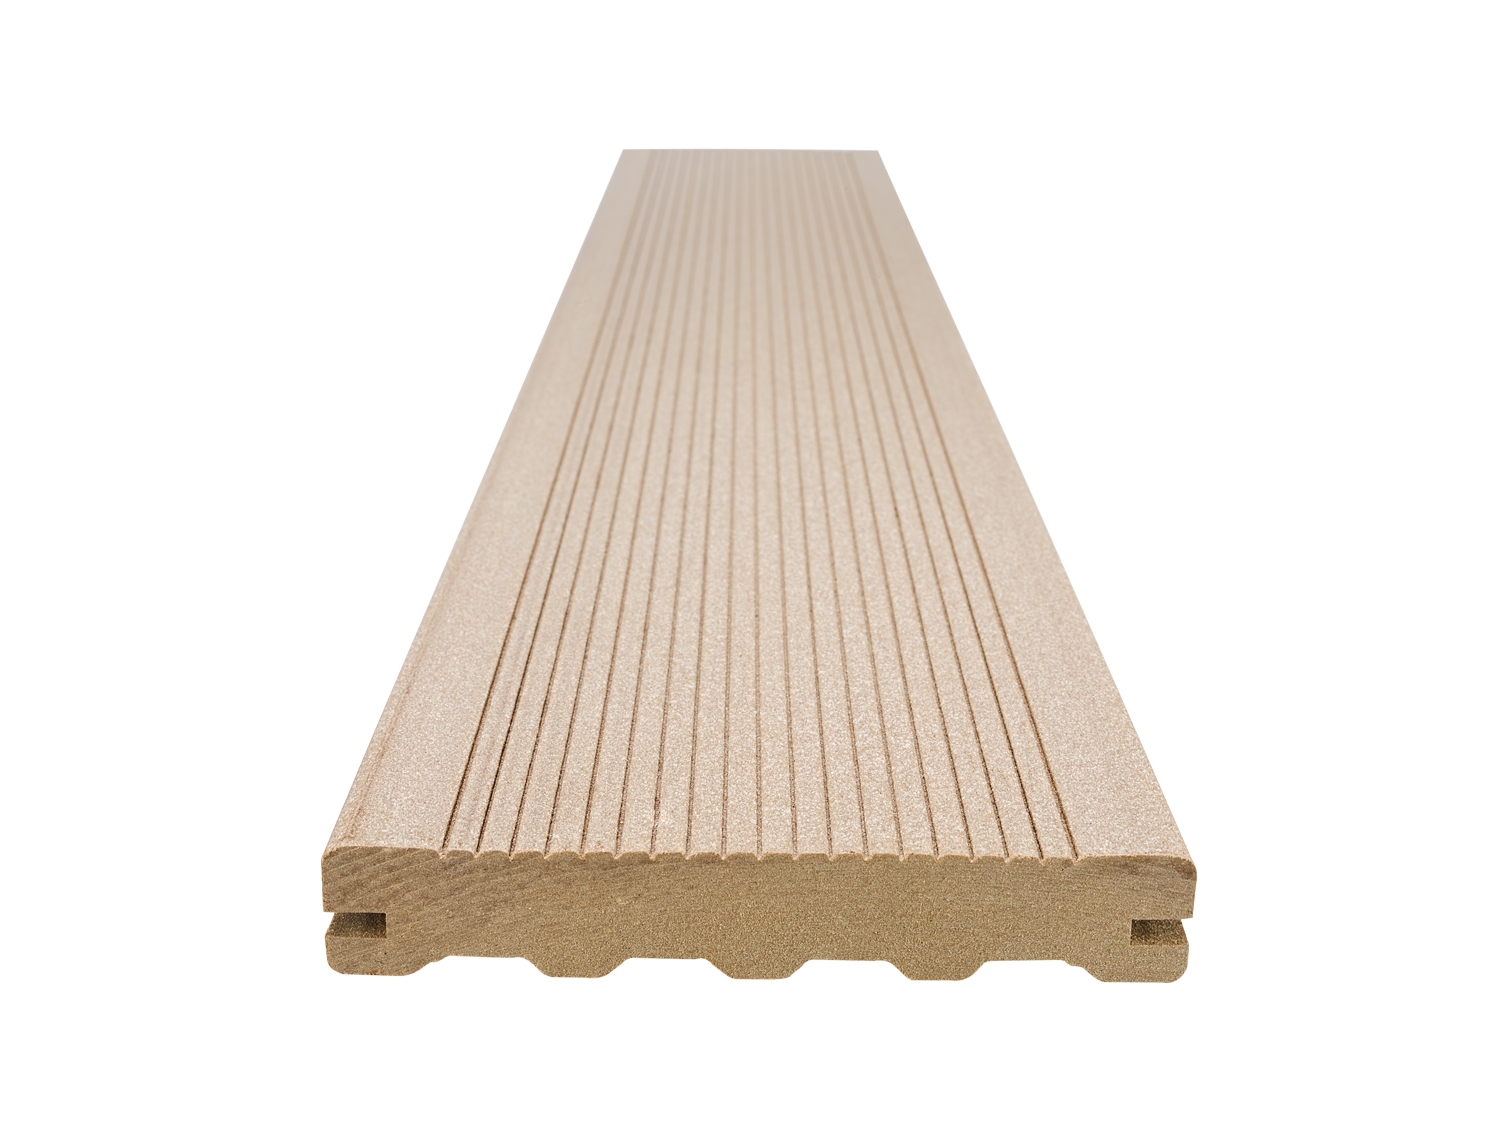 Prkno terasové Woodplastic STAR PREMIUM teak 23×137×4000 mm